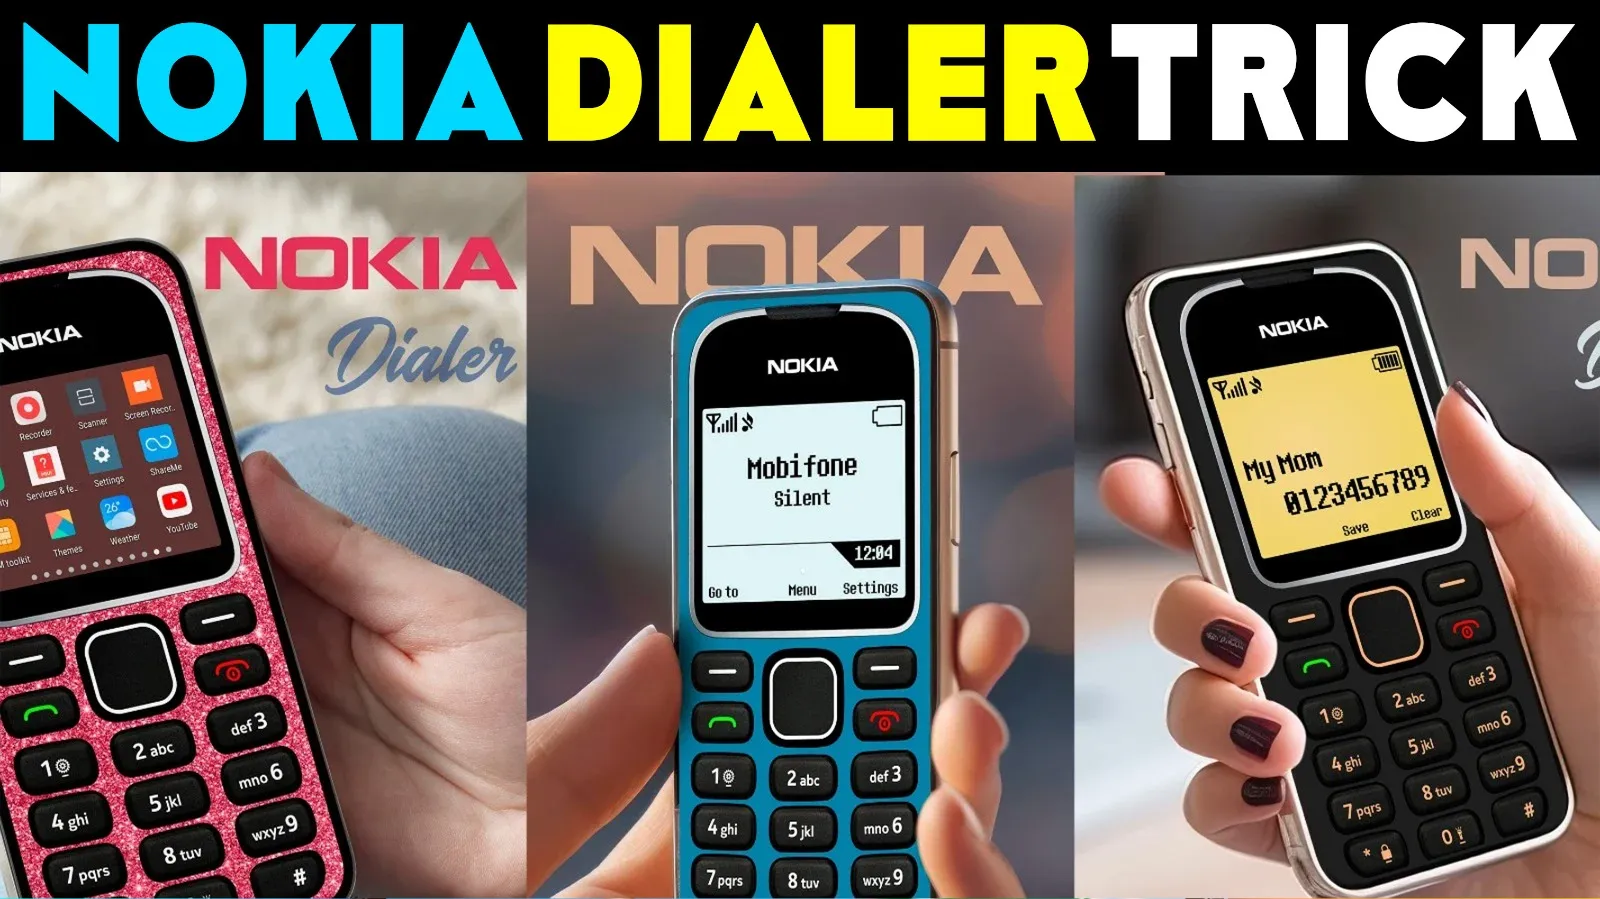 Nokia Dialer